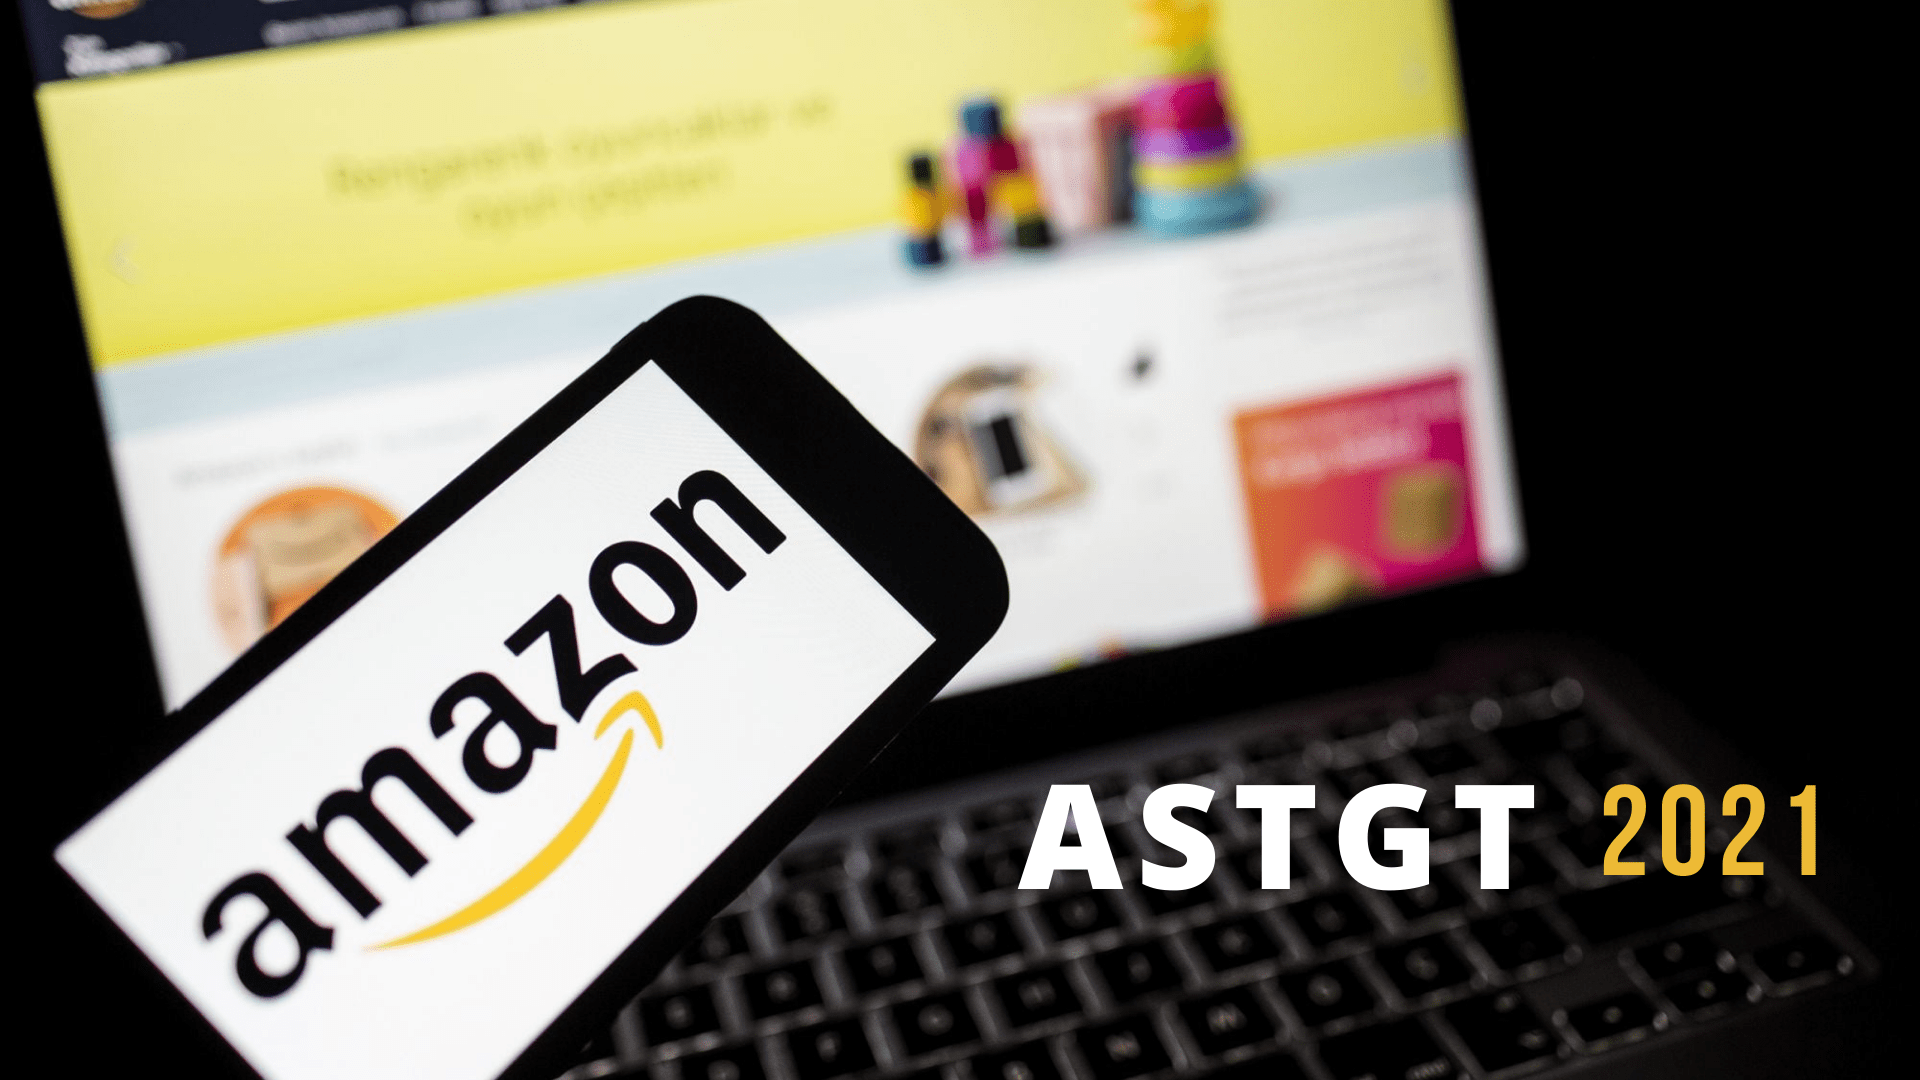 Evento para vendedores de Amazon: Comercio electrónico Post Covid